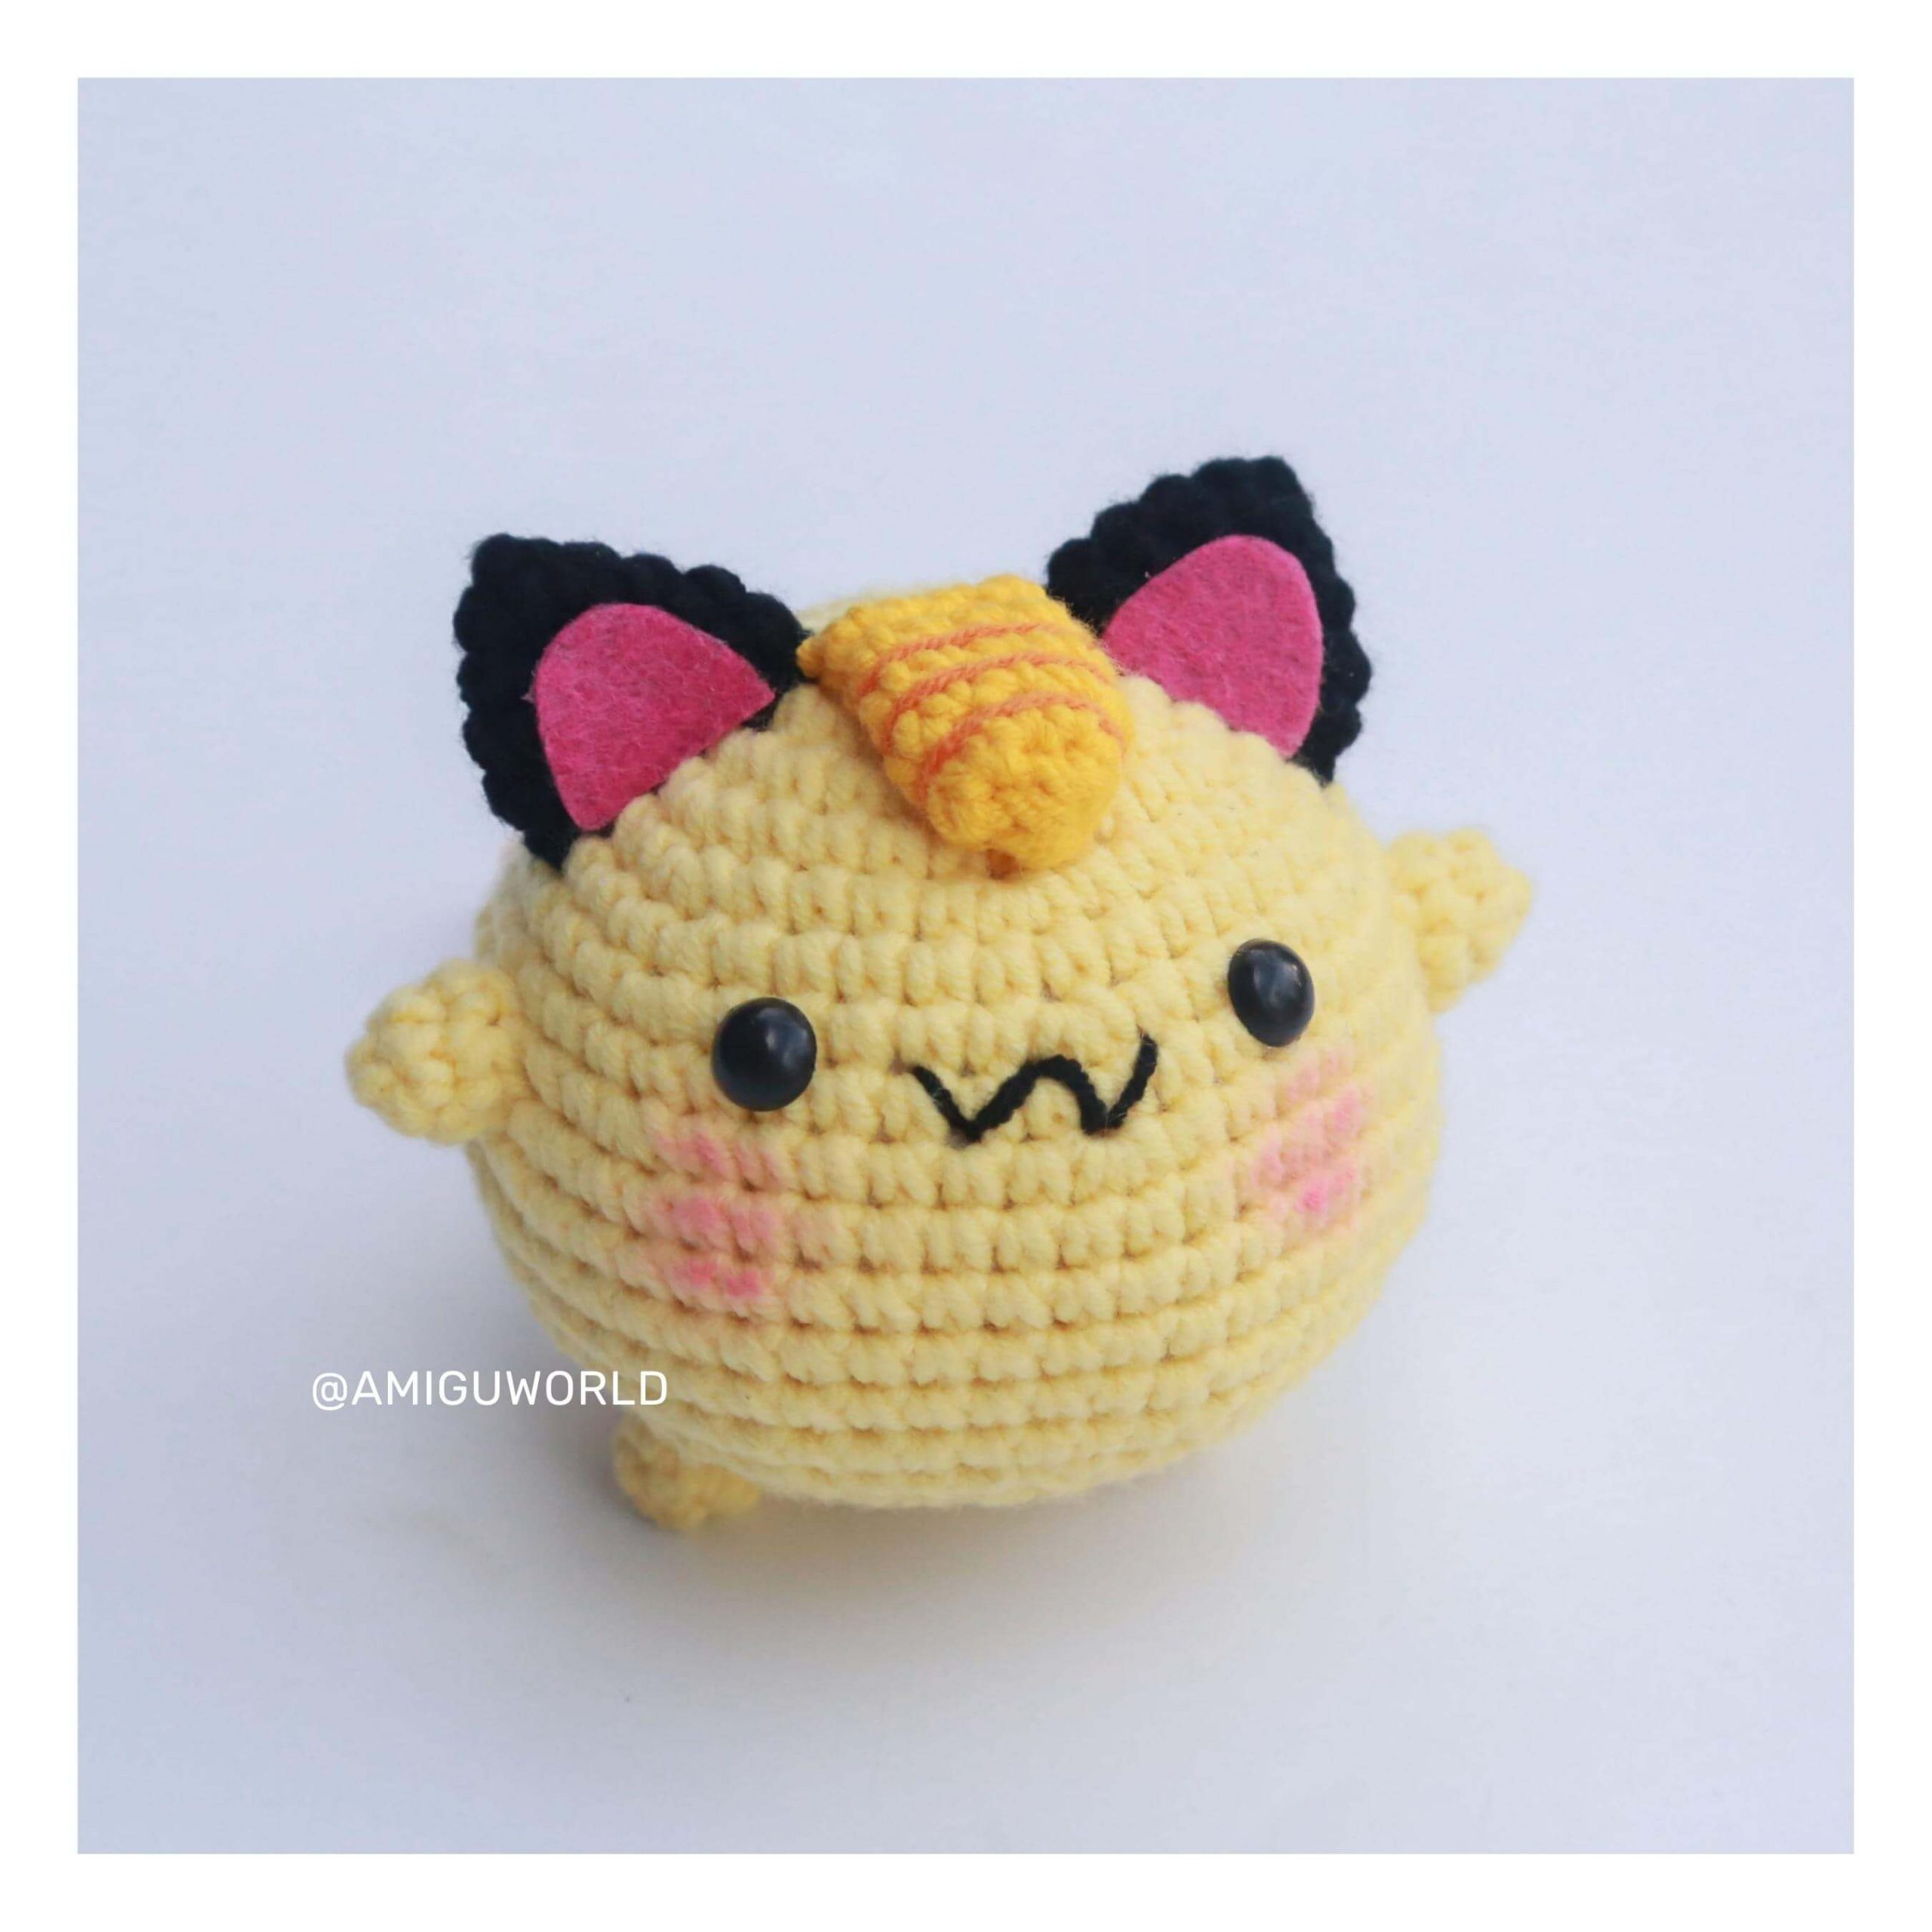 Meowth-amigurumi-crochet-pattern-by-AmiguWorld (7)